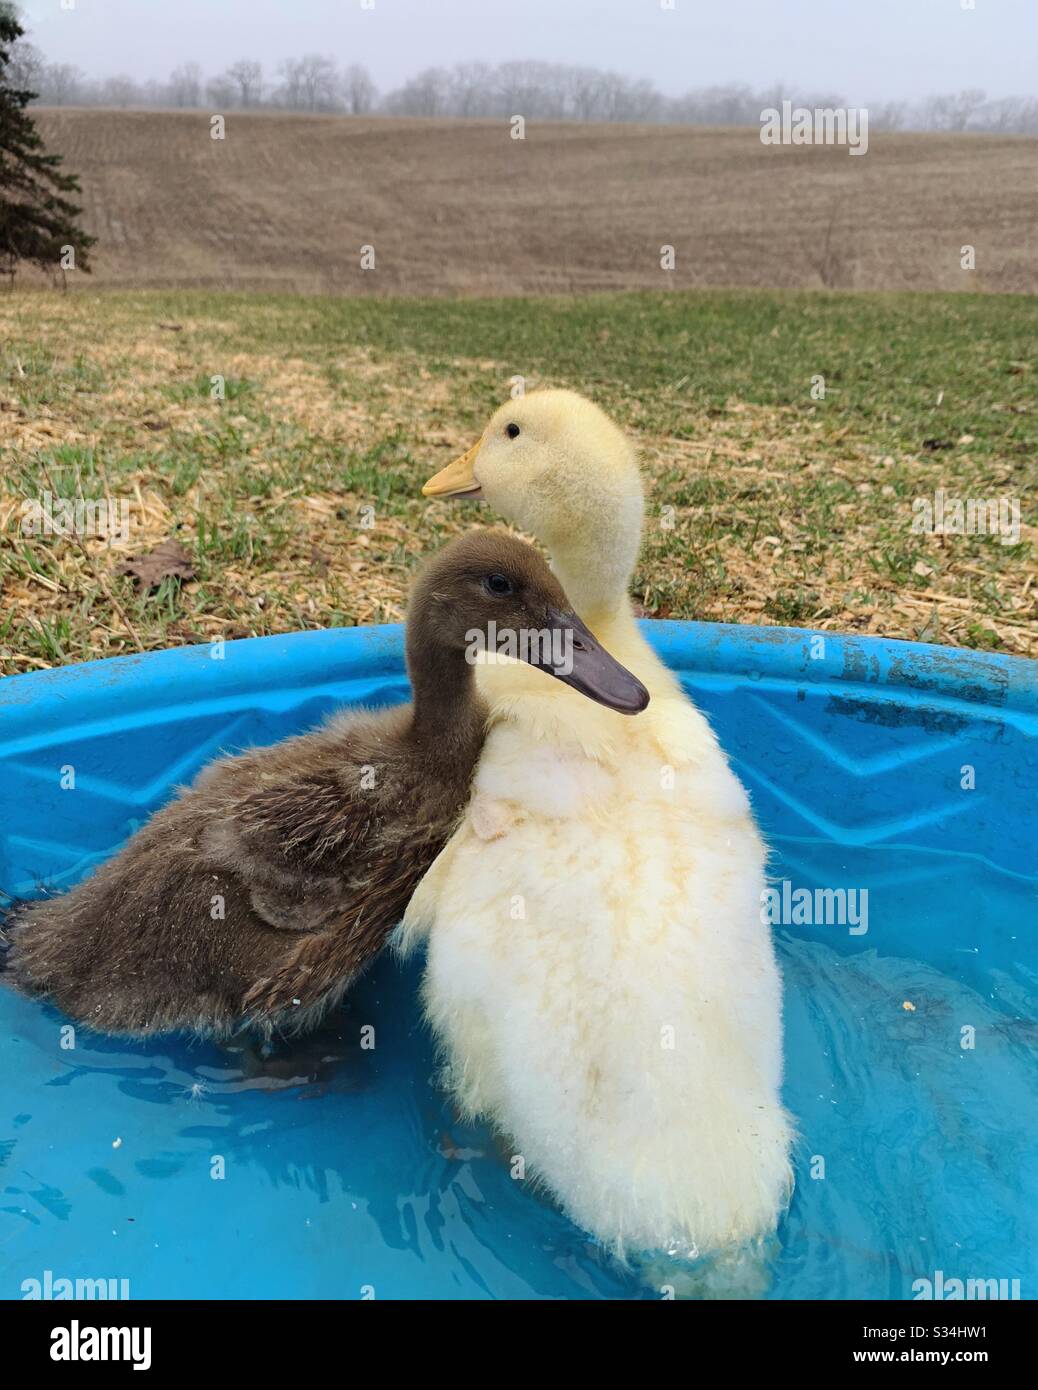 Two ducklings in a kiddie pool Stock Photo